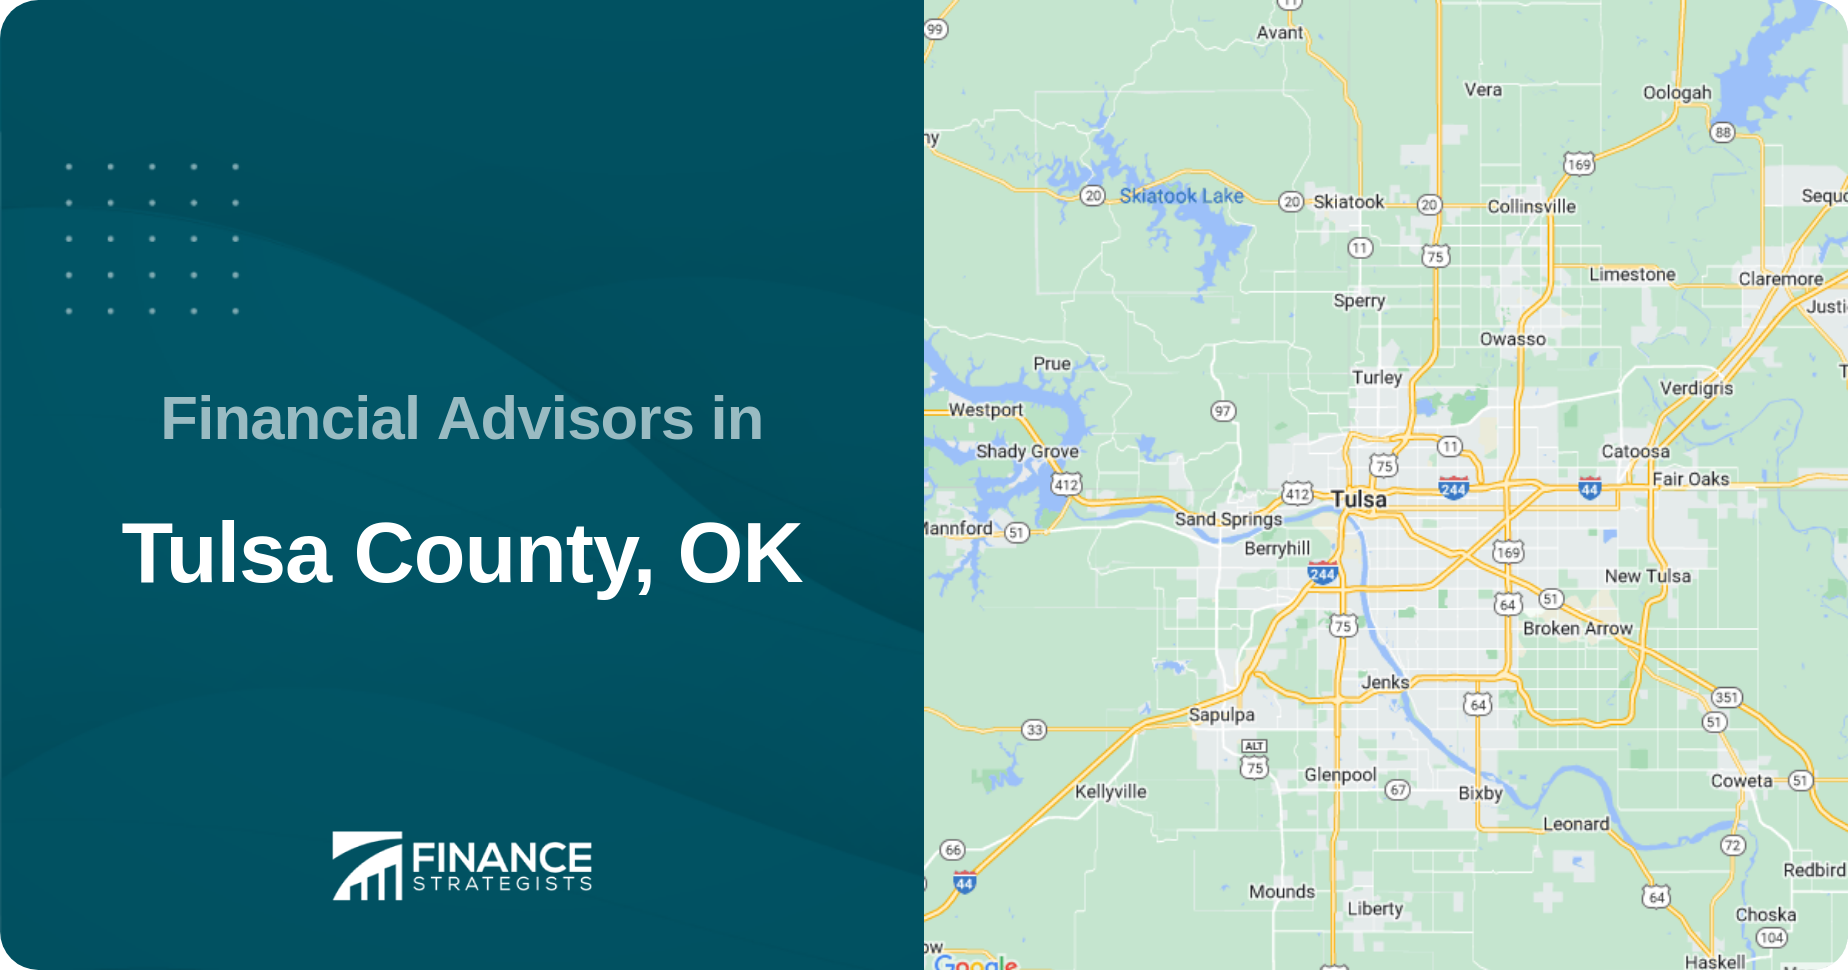 Financial Advisors in Tulsa County, OK